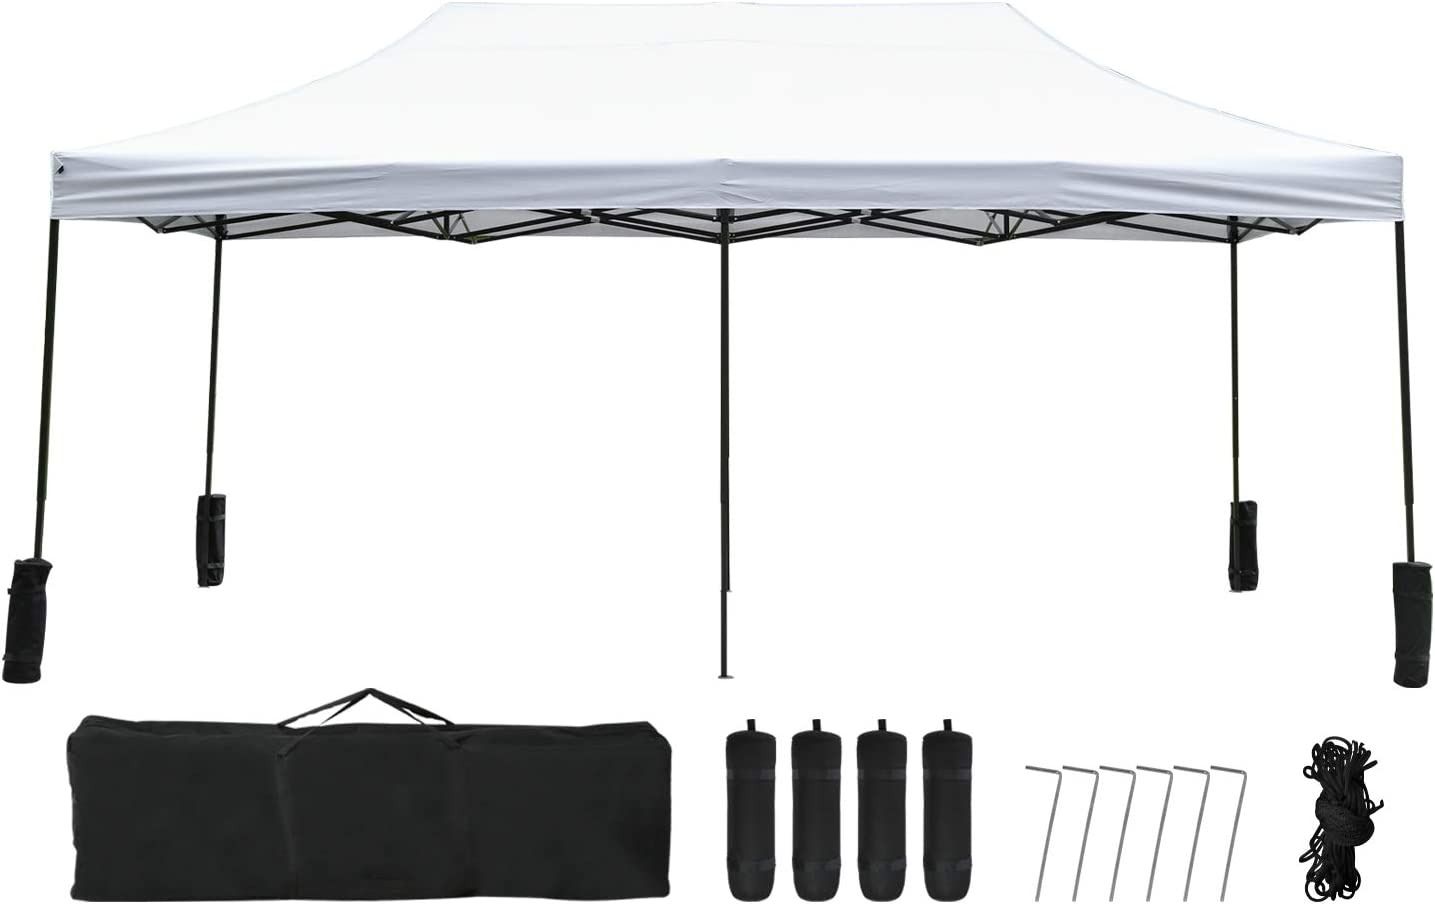 thinkstar Pop Up Canopy 10X20 Pop Up Canopy Tent Folding Protable Ez Up Canopy Party